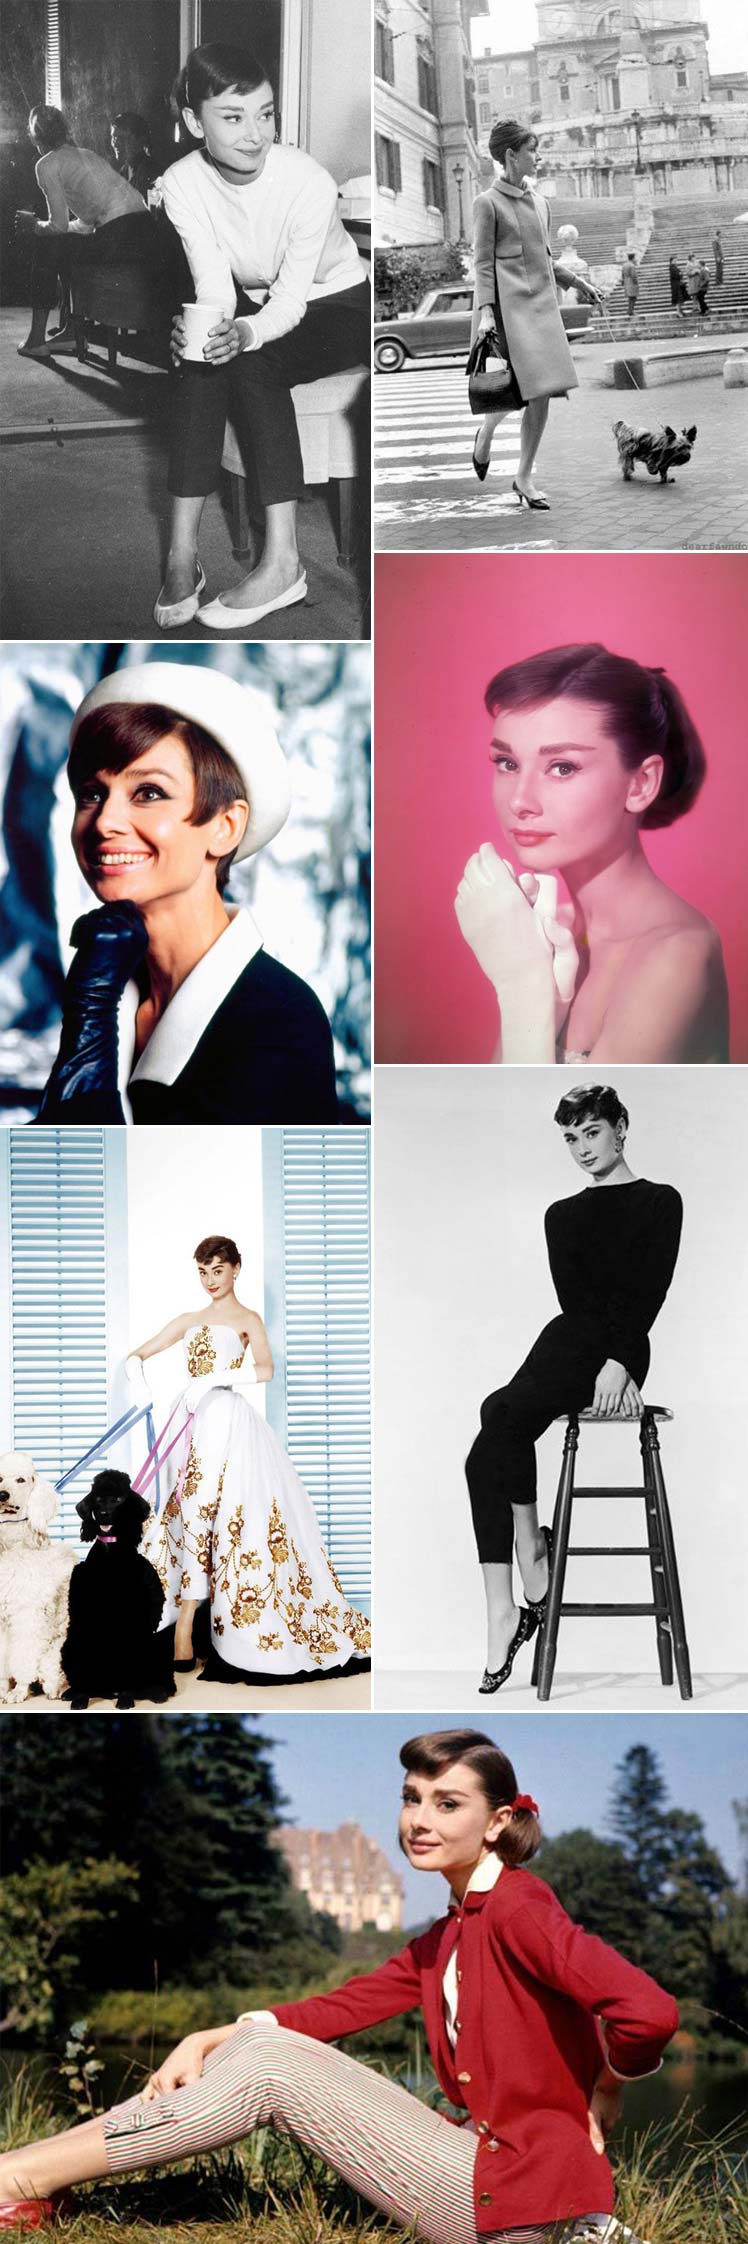 Audrey Hepburn's timeless style